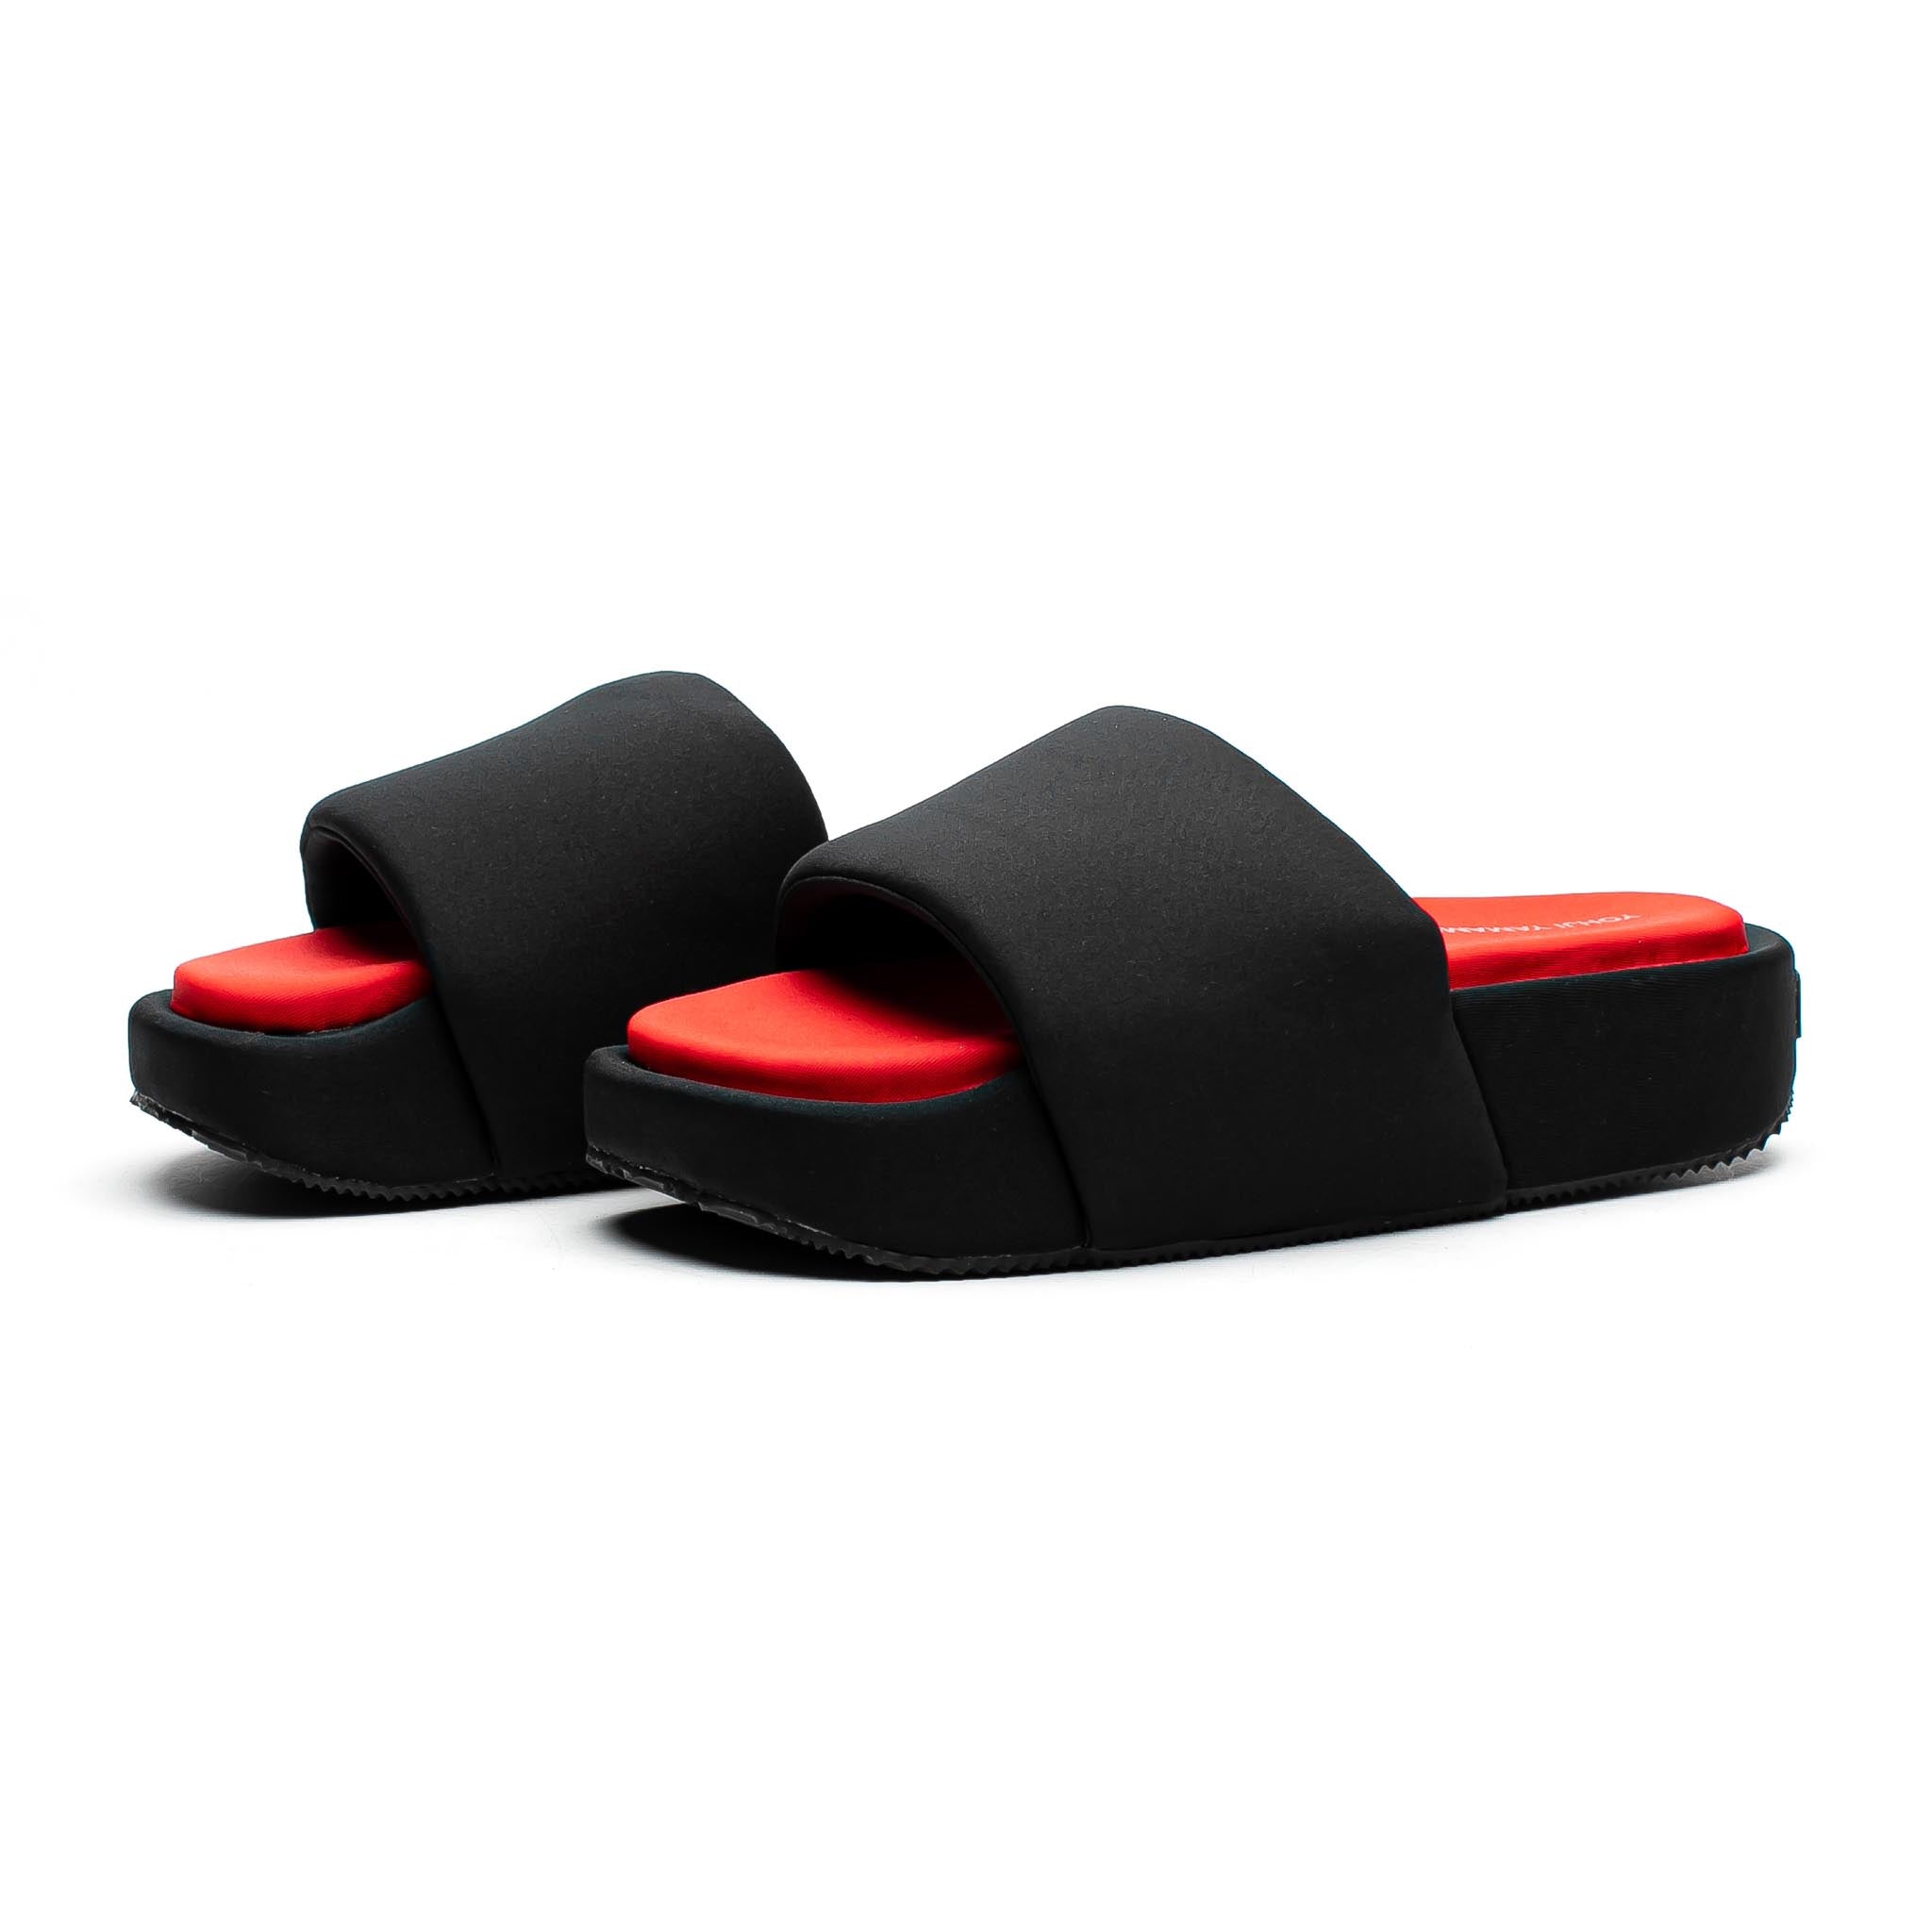 ADIDAS Y-3 Slides Black/Red